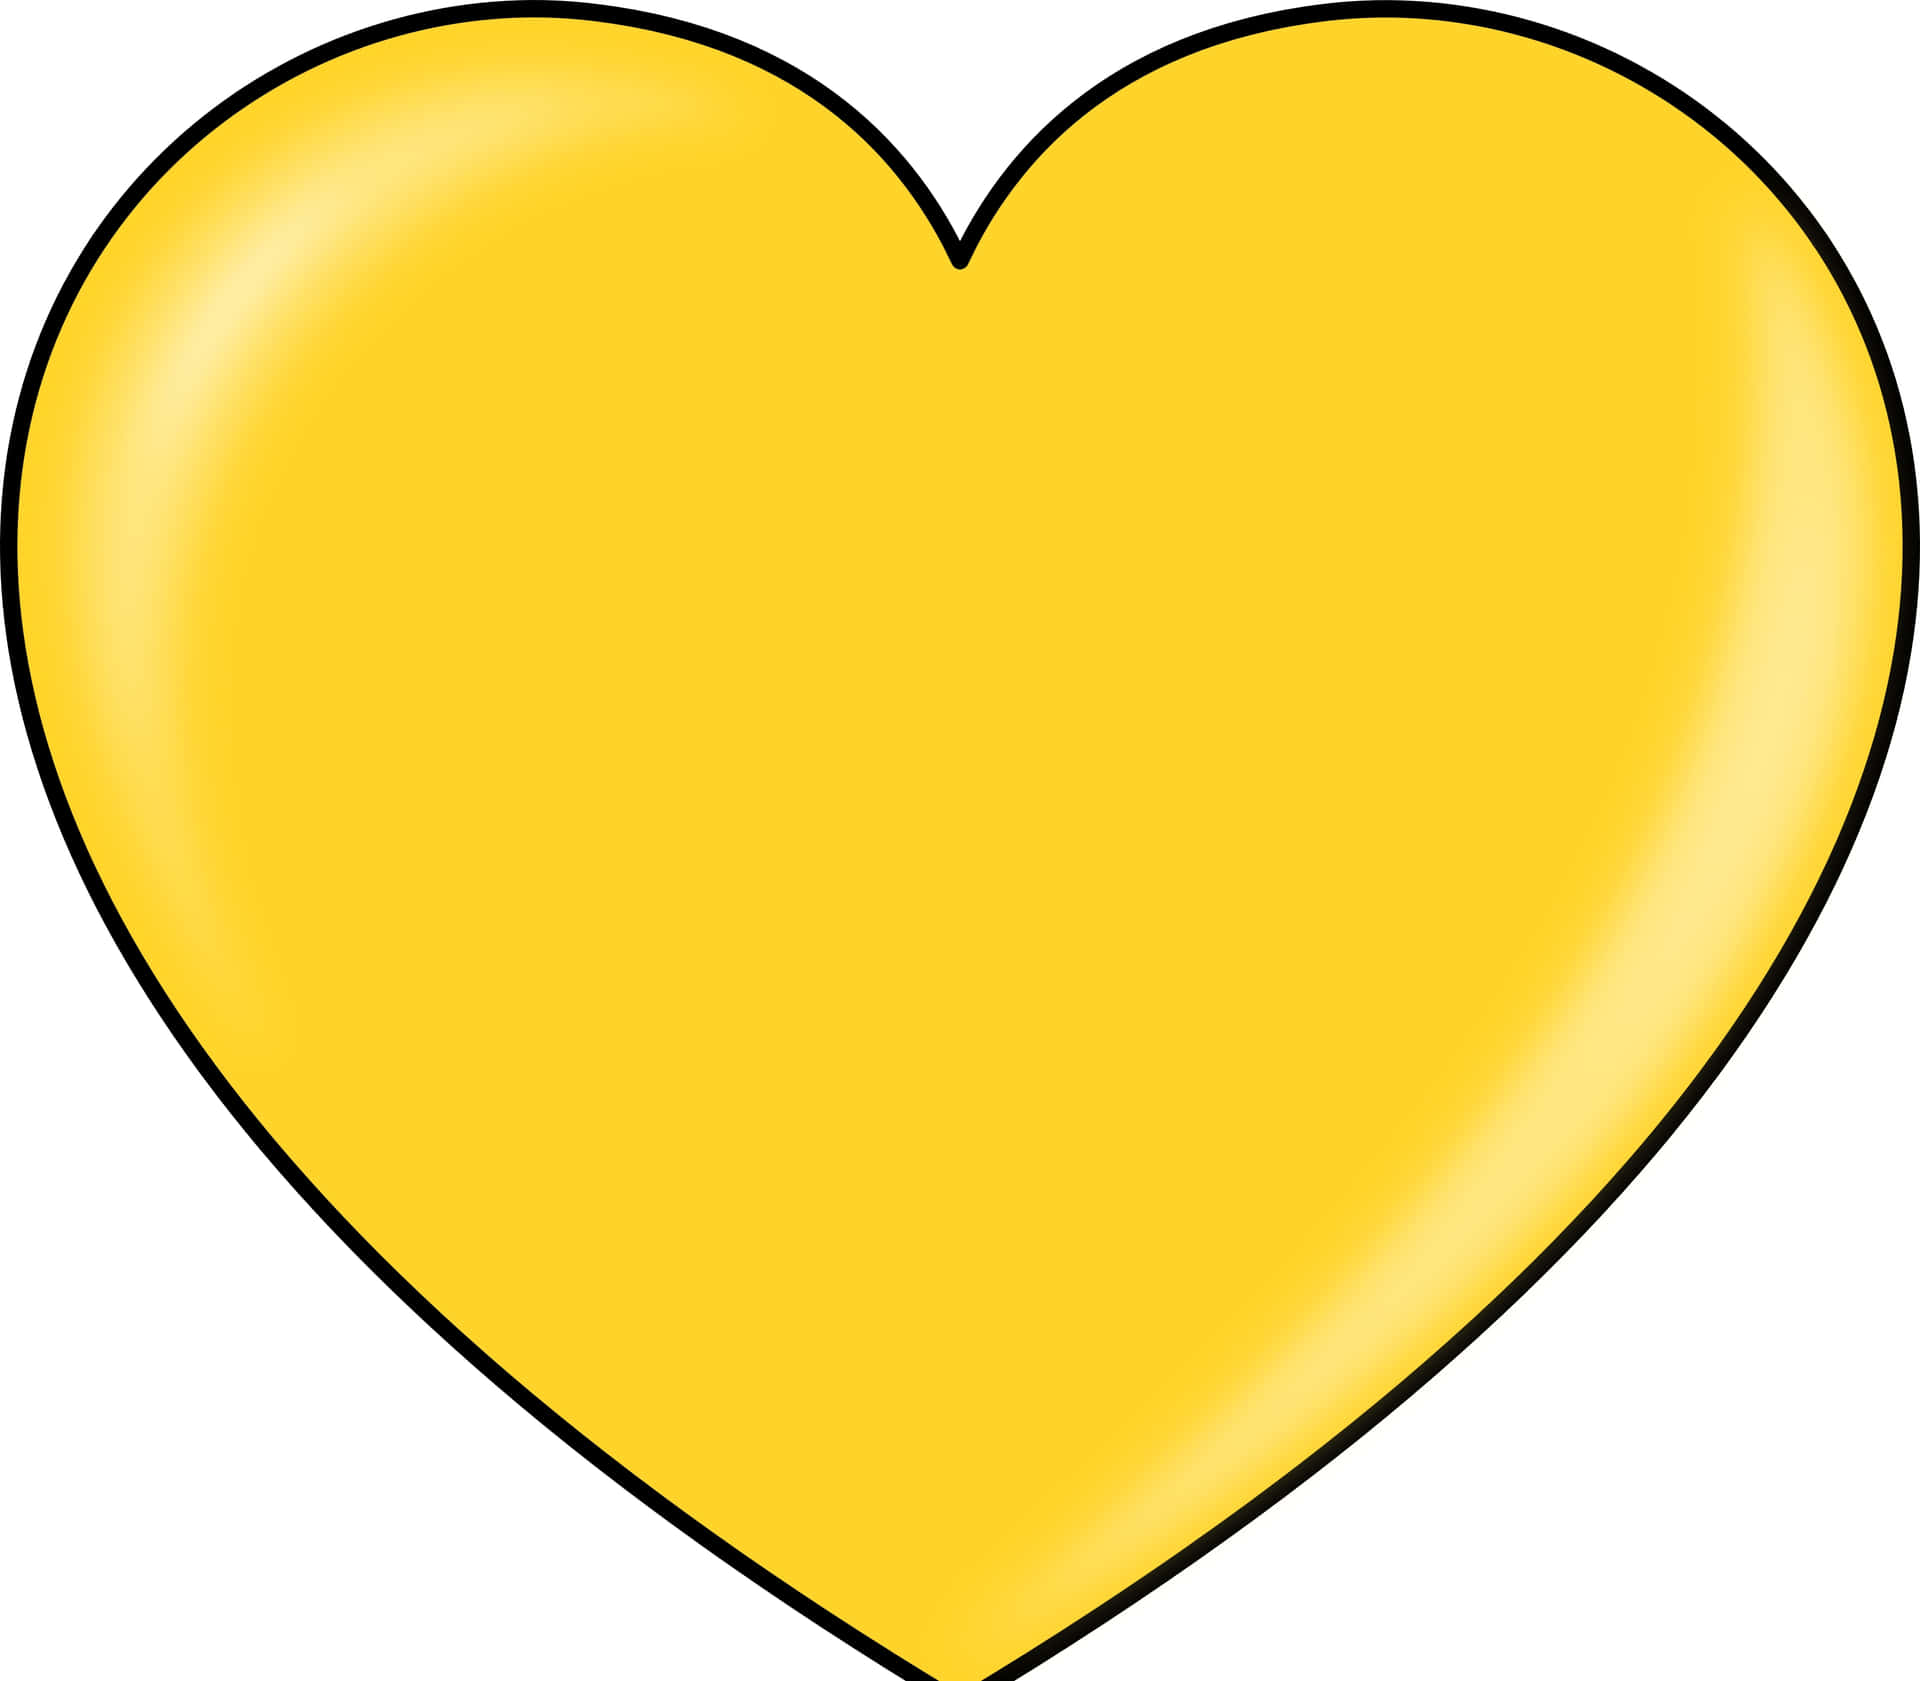 Vibrant Yellow Heart Graphic on Dark Background Wallpaper